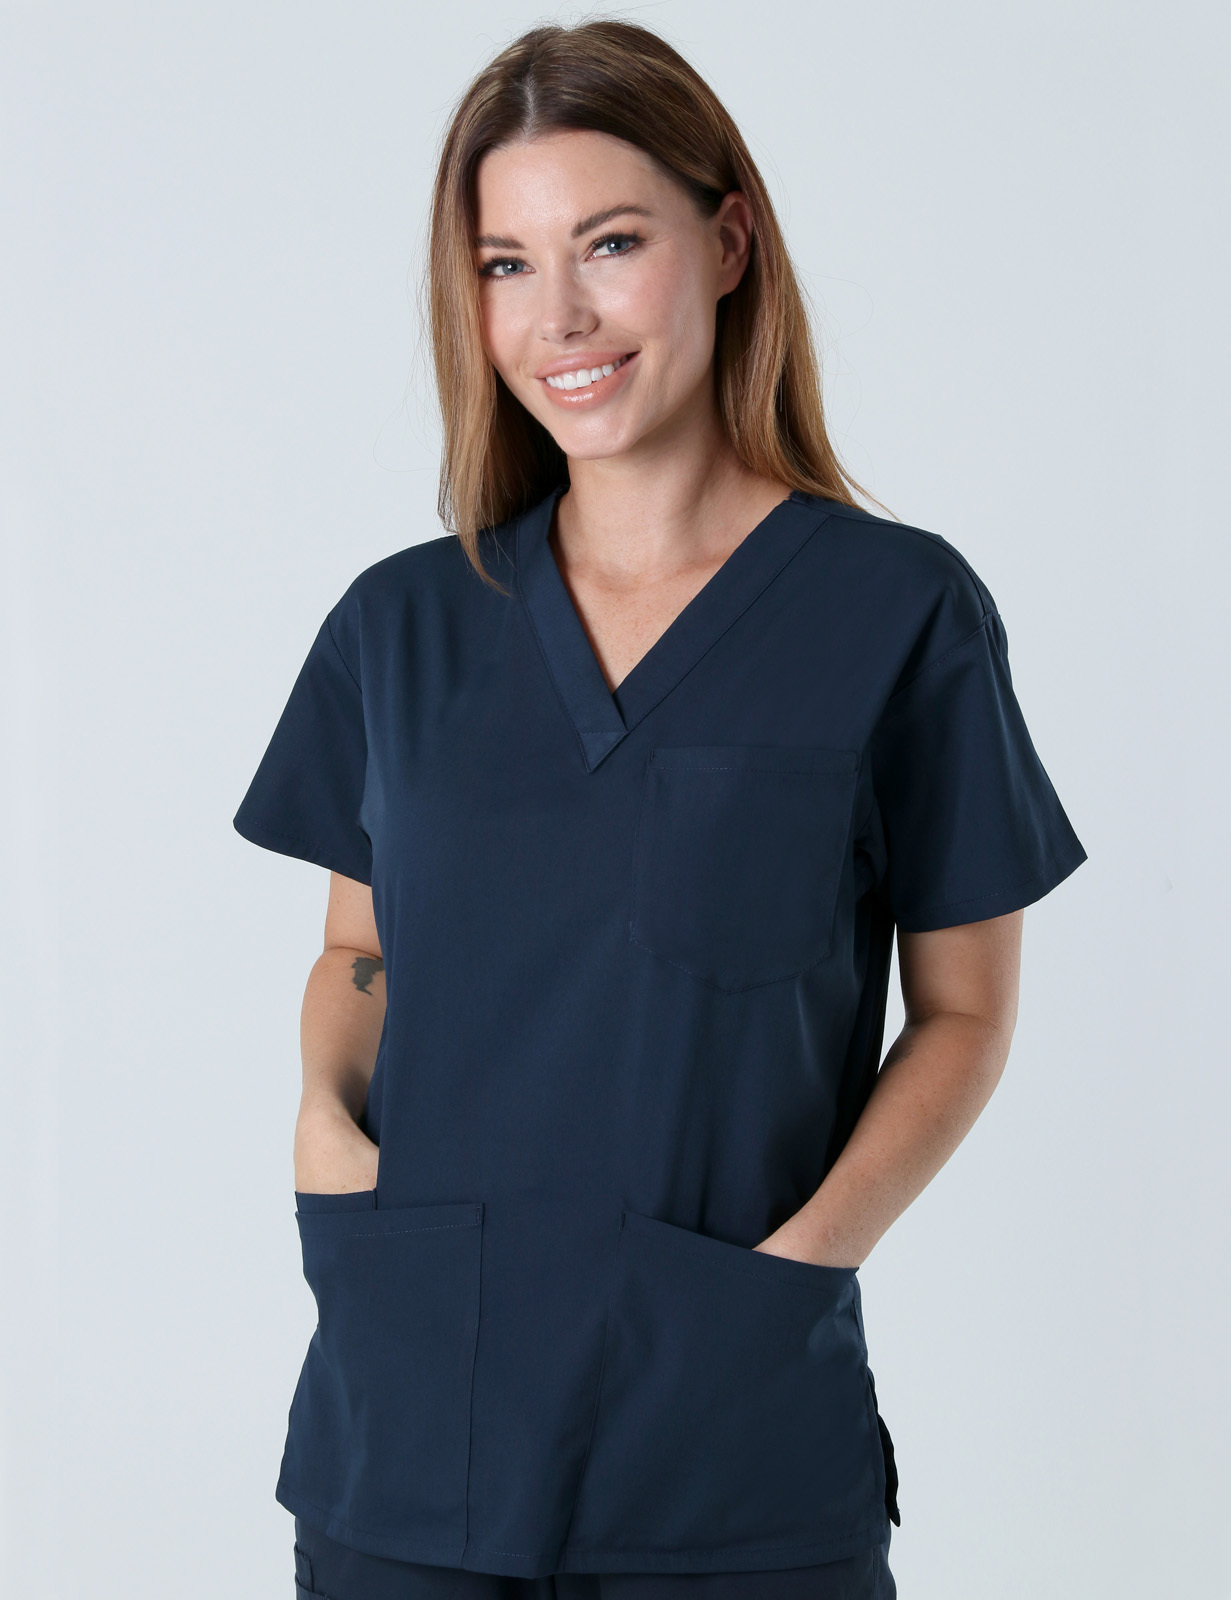 Caloundra Hospital - Registered Nurse (4 Pocket Scrub Top and Cargo Pants in Navy incl Logos)